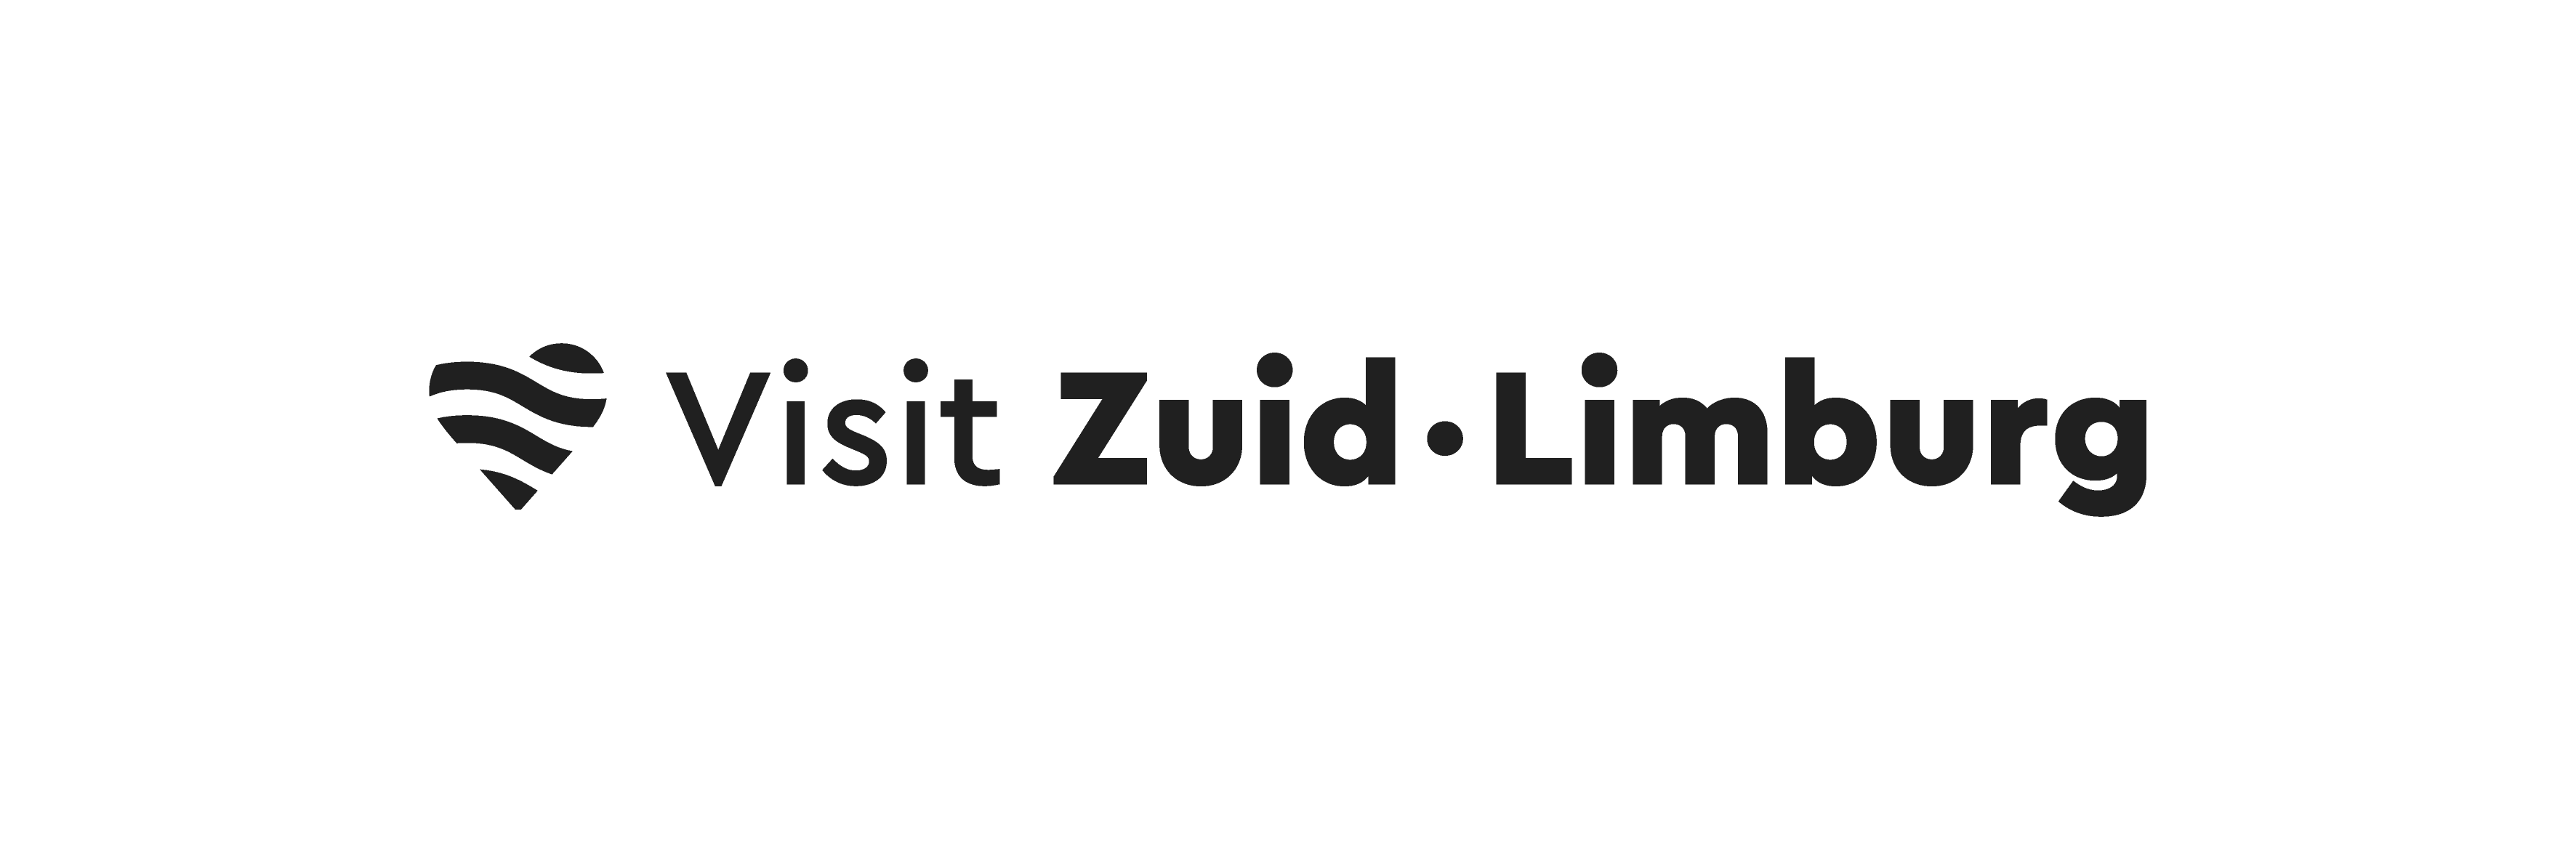 Visit-Zuid-Limburg-Logo-Zwart-2